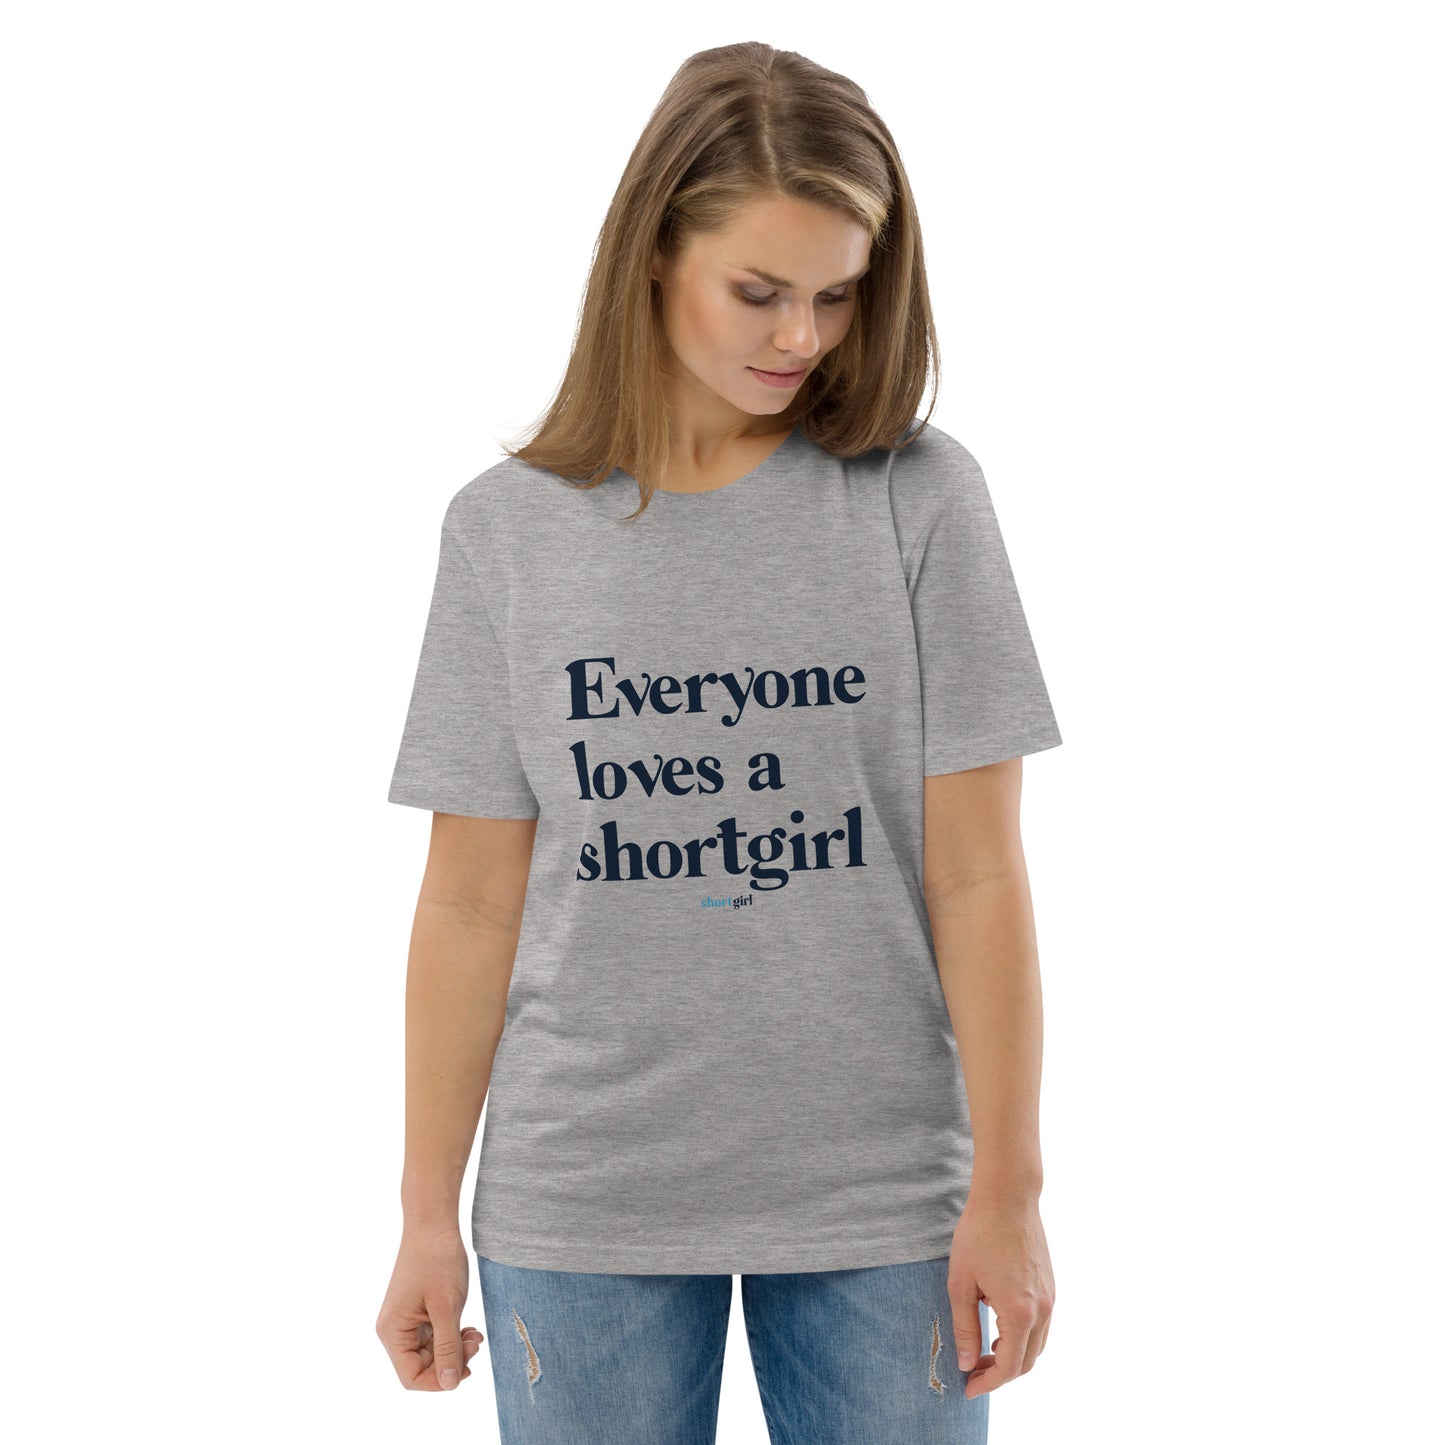 Unisex organic cotton t-shirt - Everyone Loves a shortgirl